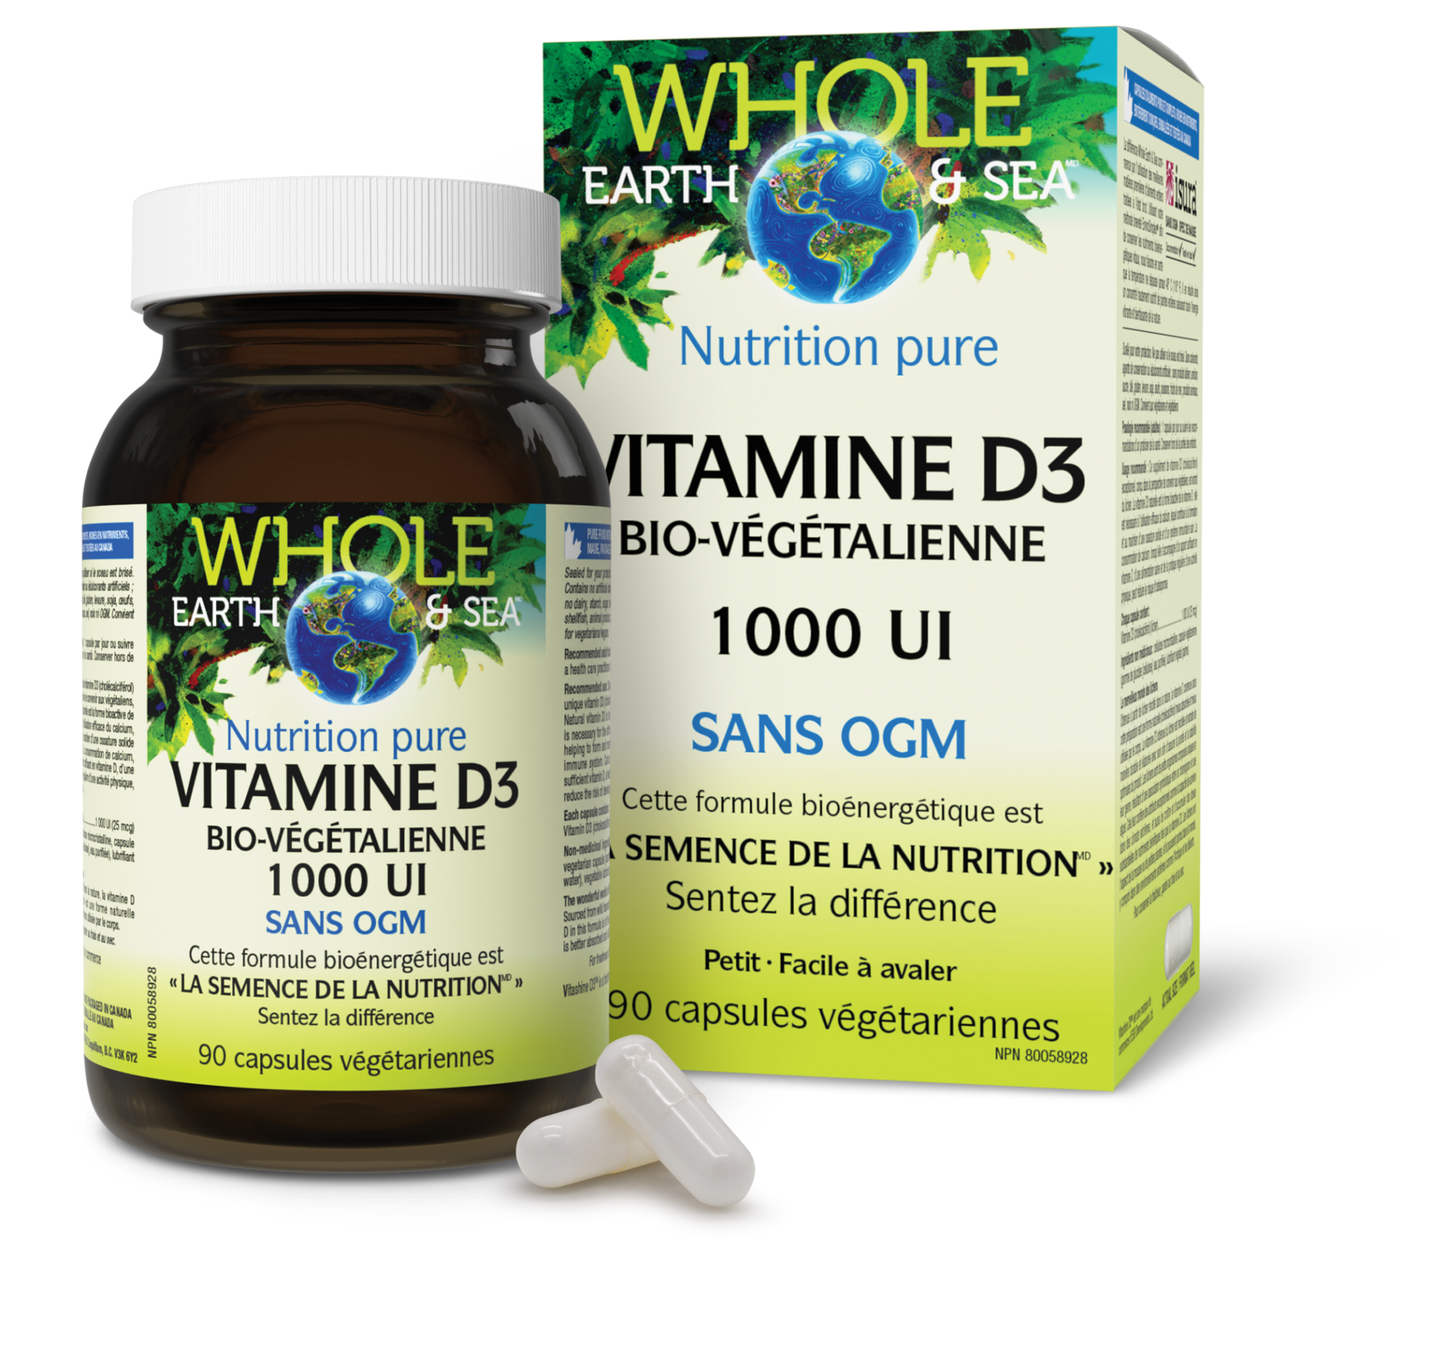 Vitamine D3 bio-végétalienne 1 000 UI, Whole Earth & Sea, Whole Earth & Sea®|v|image|35512